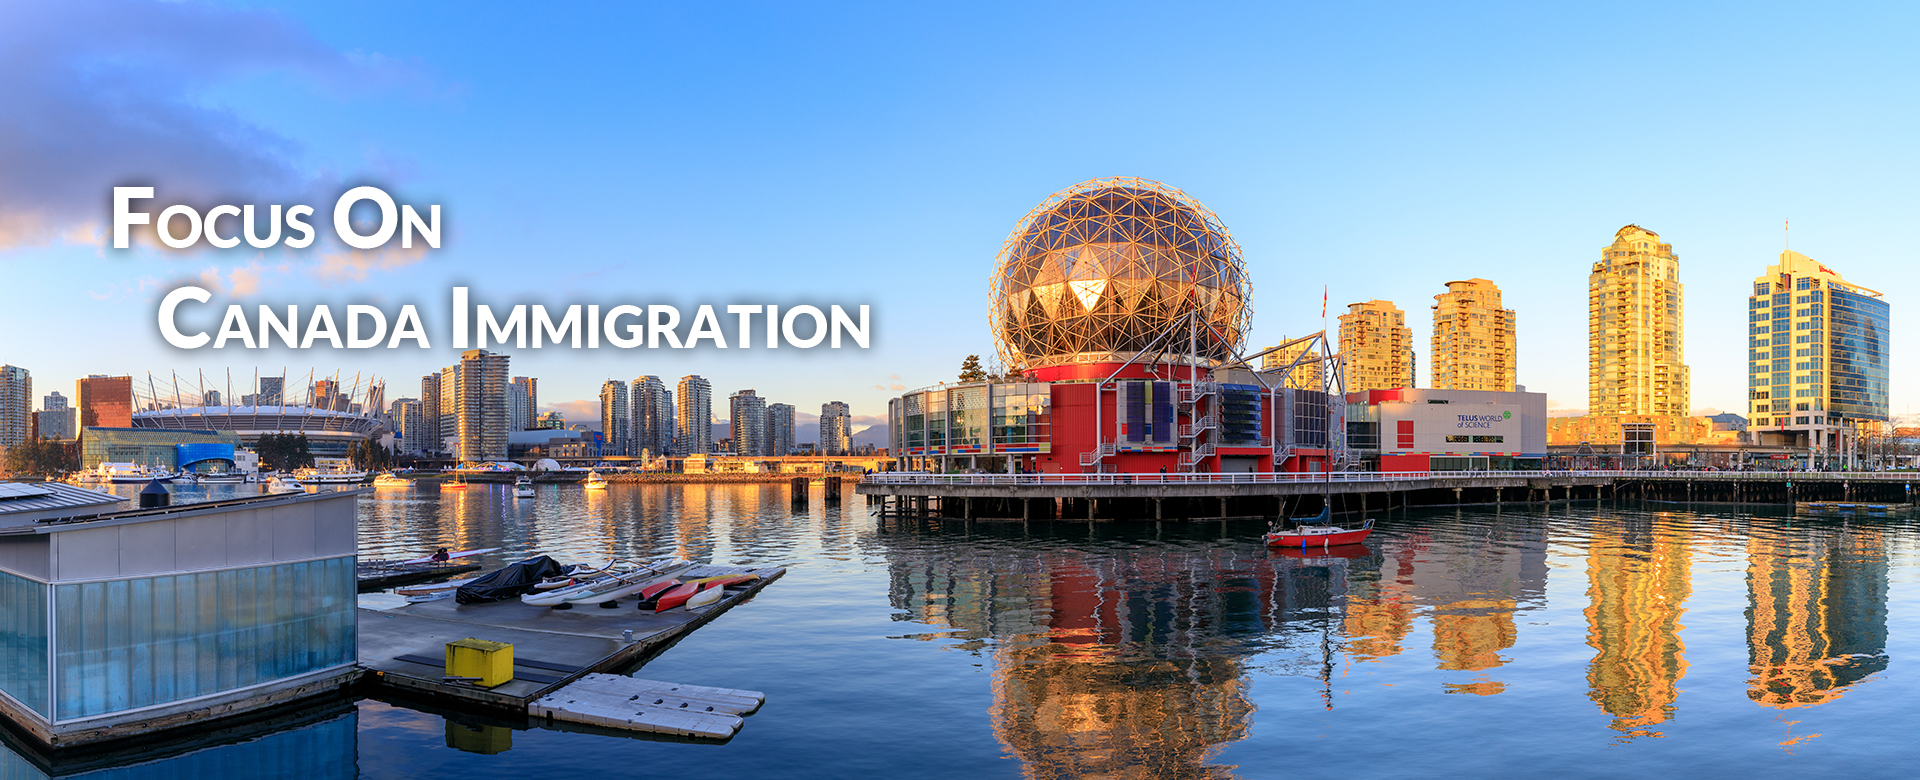 Focus On Canada Immigration